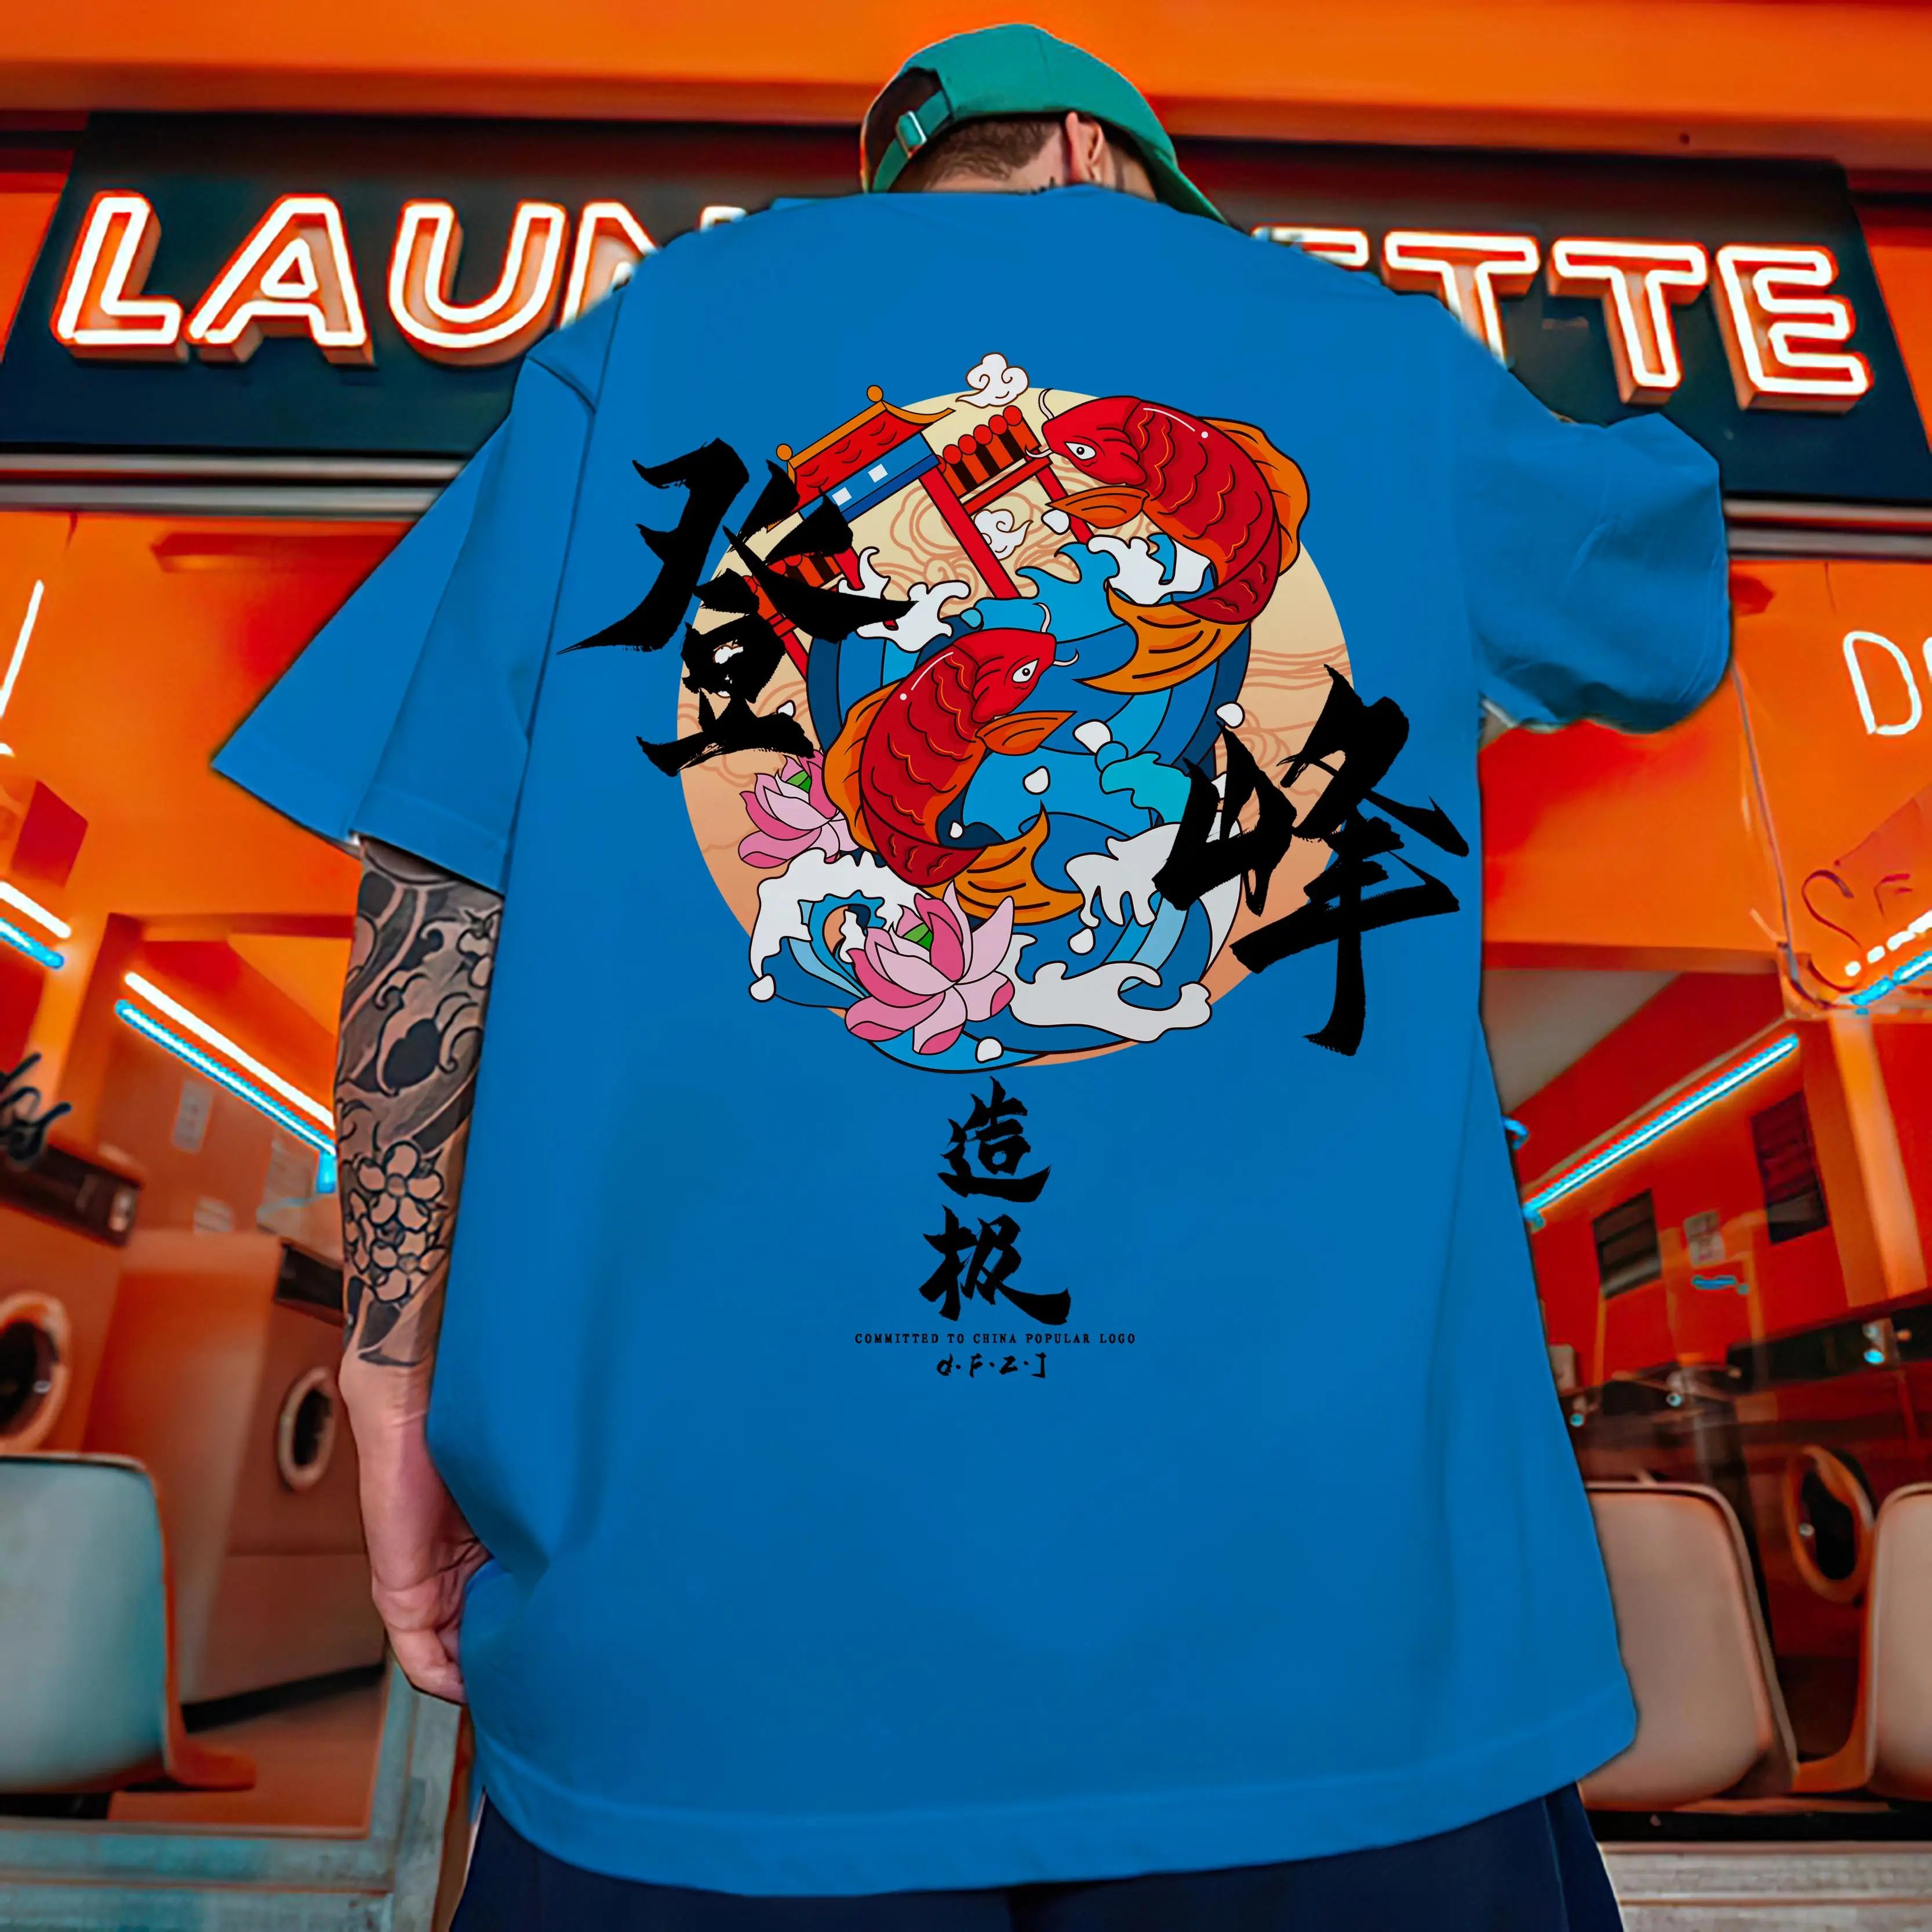 Anime panda T-shirt assorted